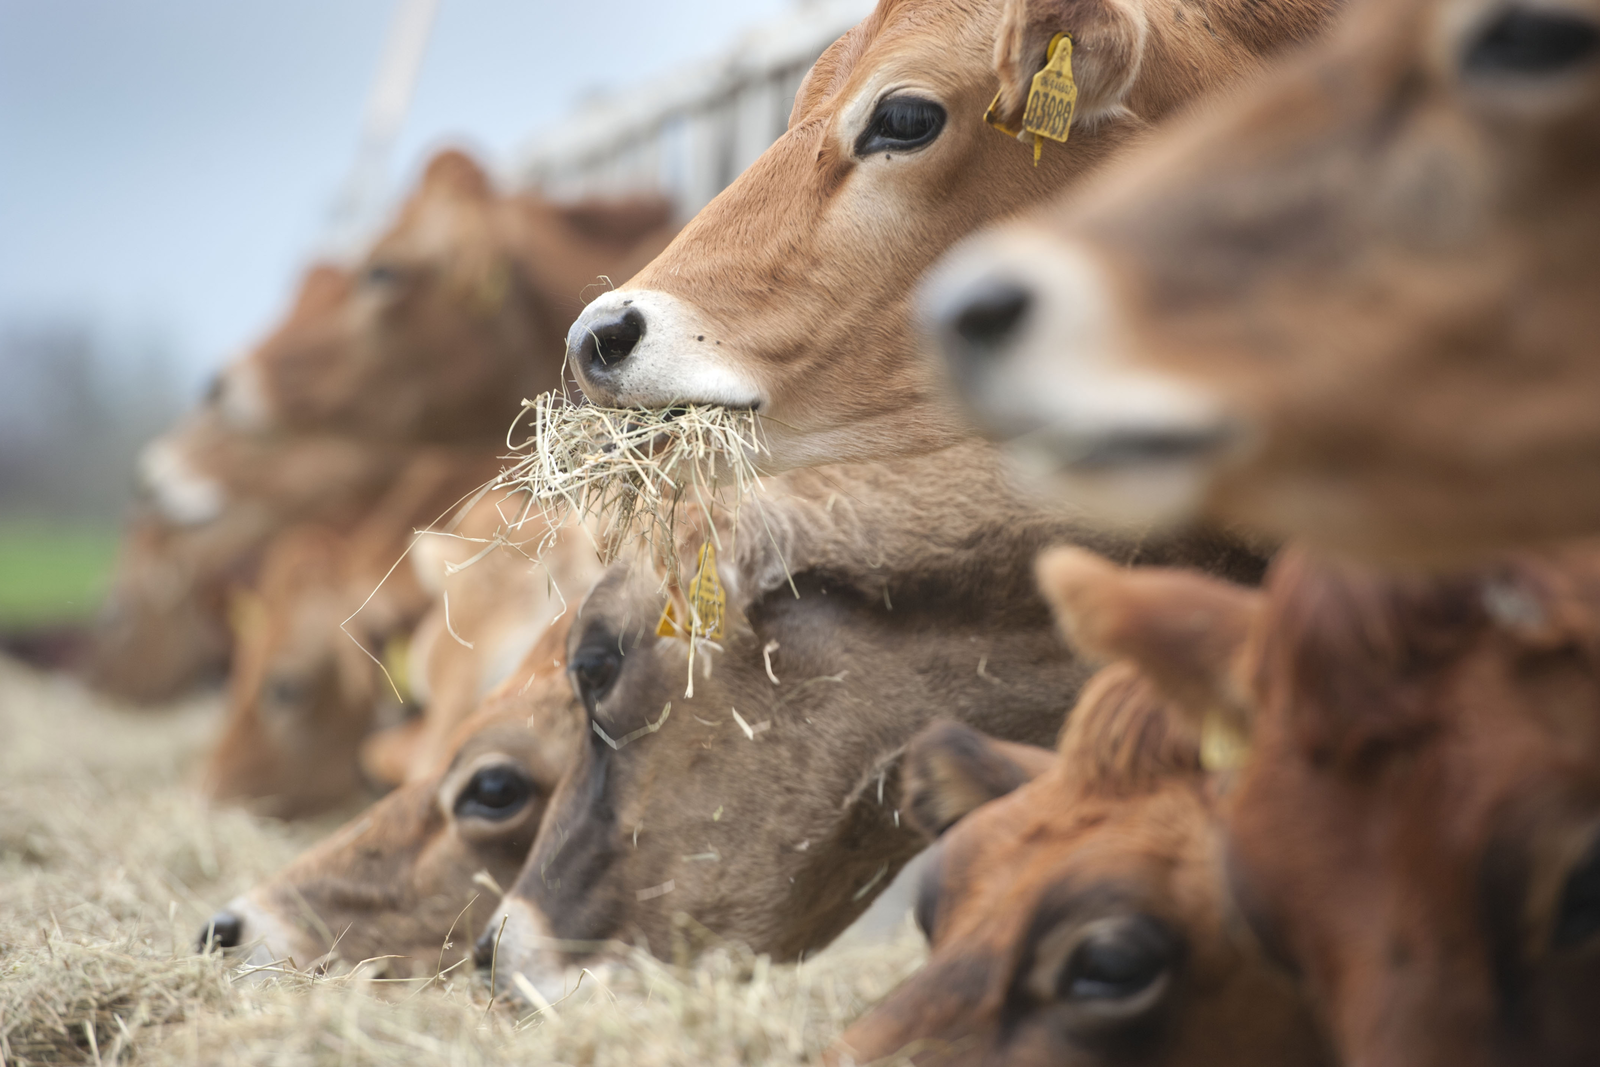 onderdak saai wijk The best feed efficiency: Holstein or Jersey? - All About Feed